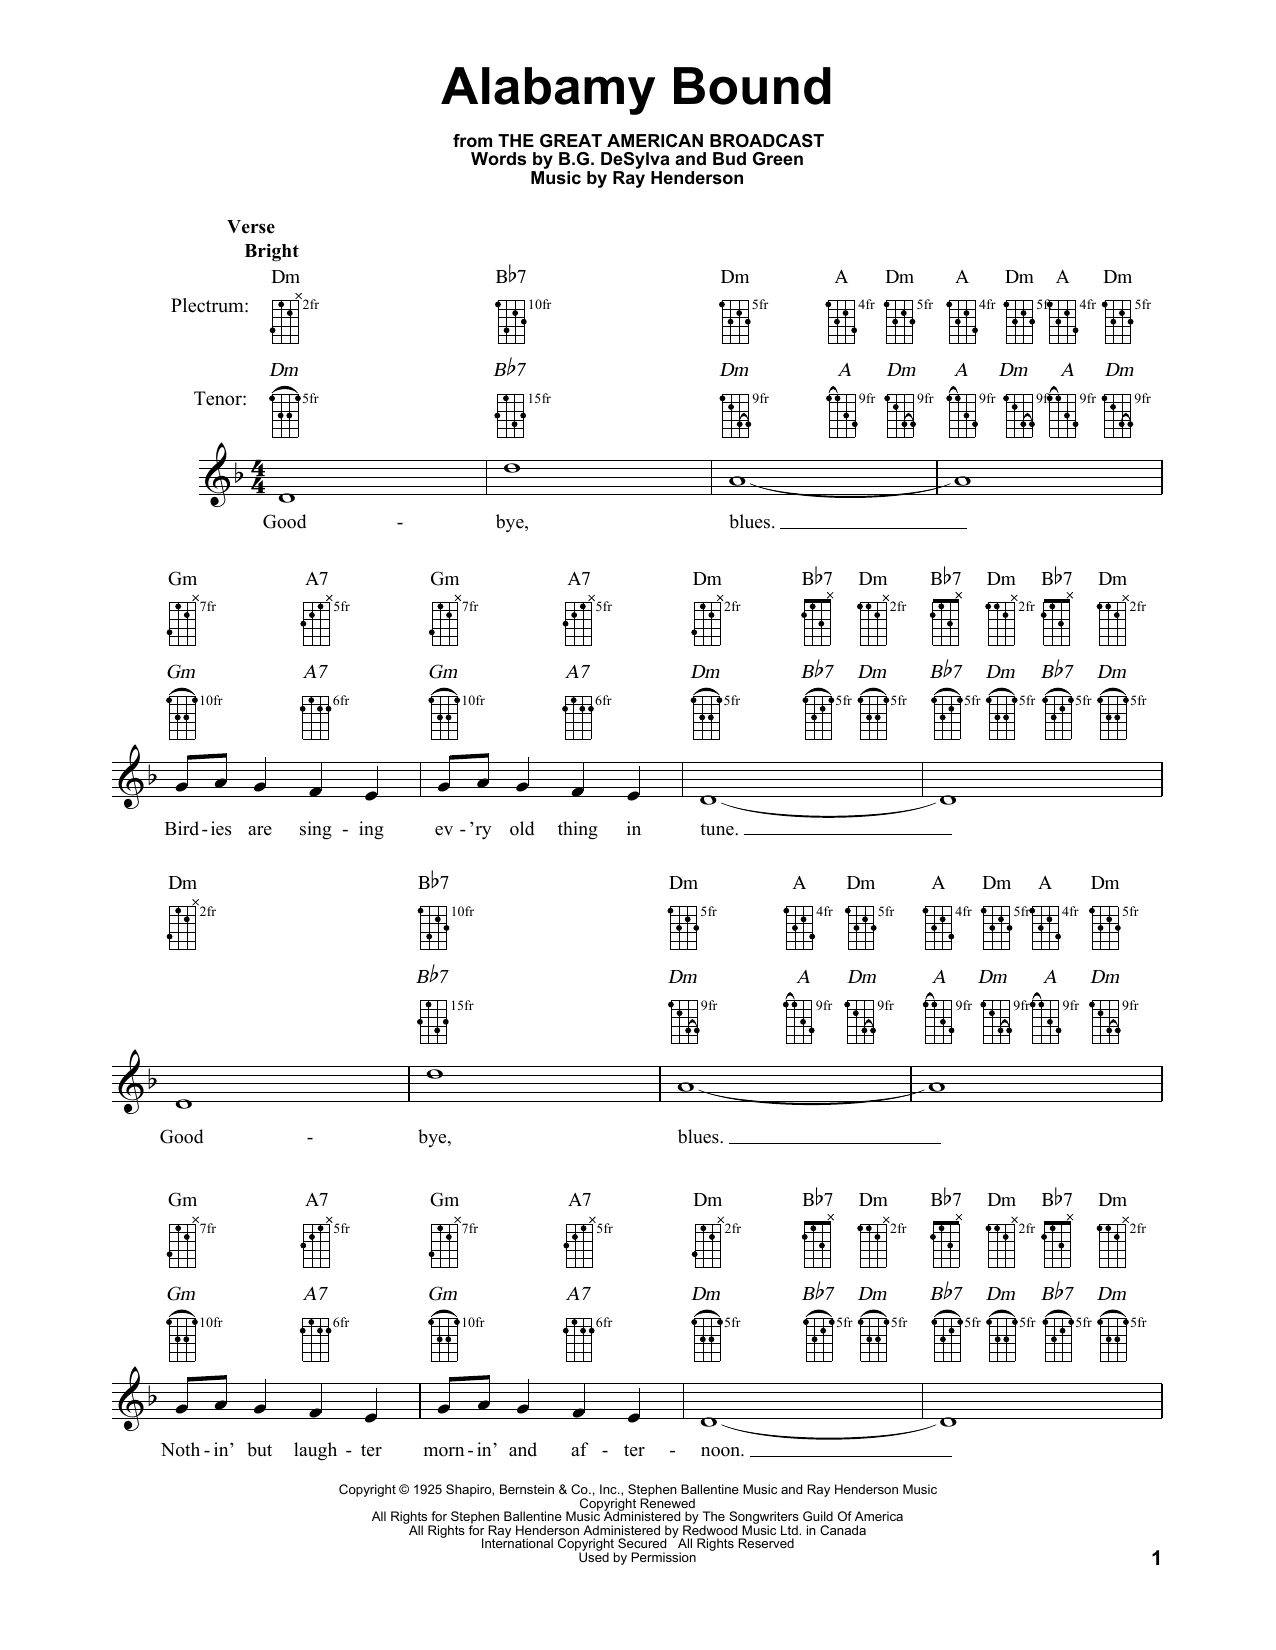 Bud Green Alabamy Bound Sheet Music Notes & Chords for Banjo - Download or Print PDF